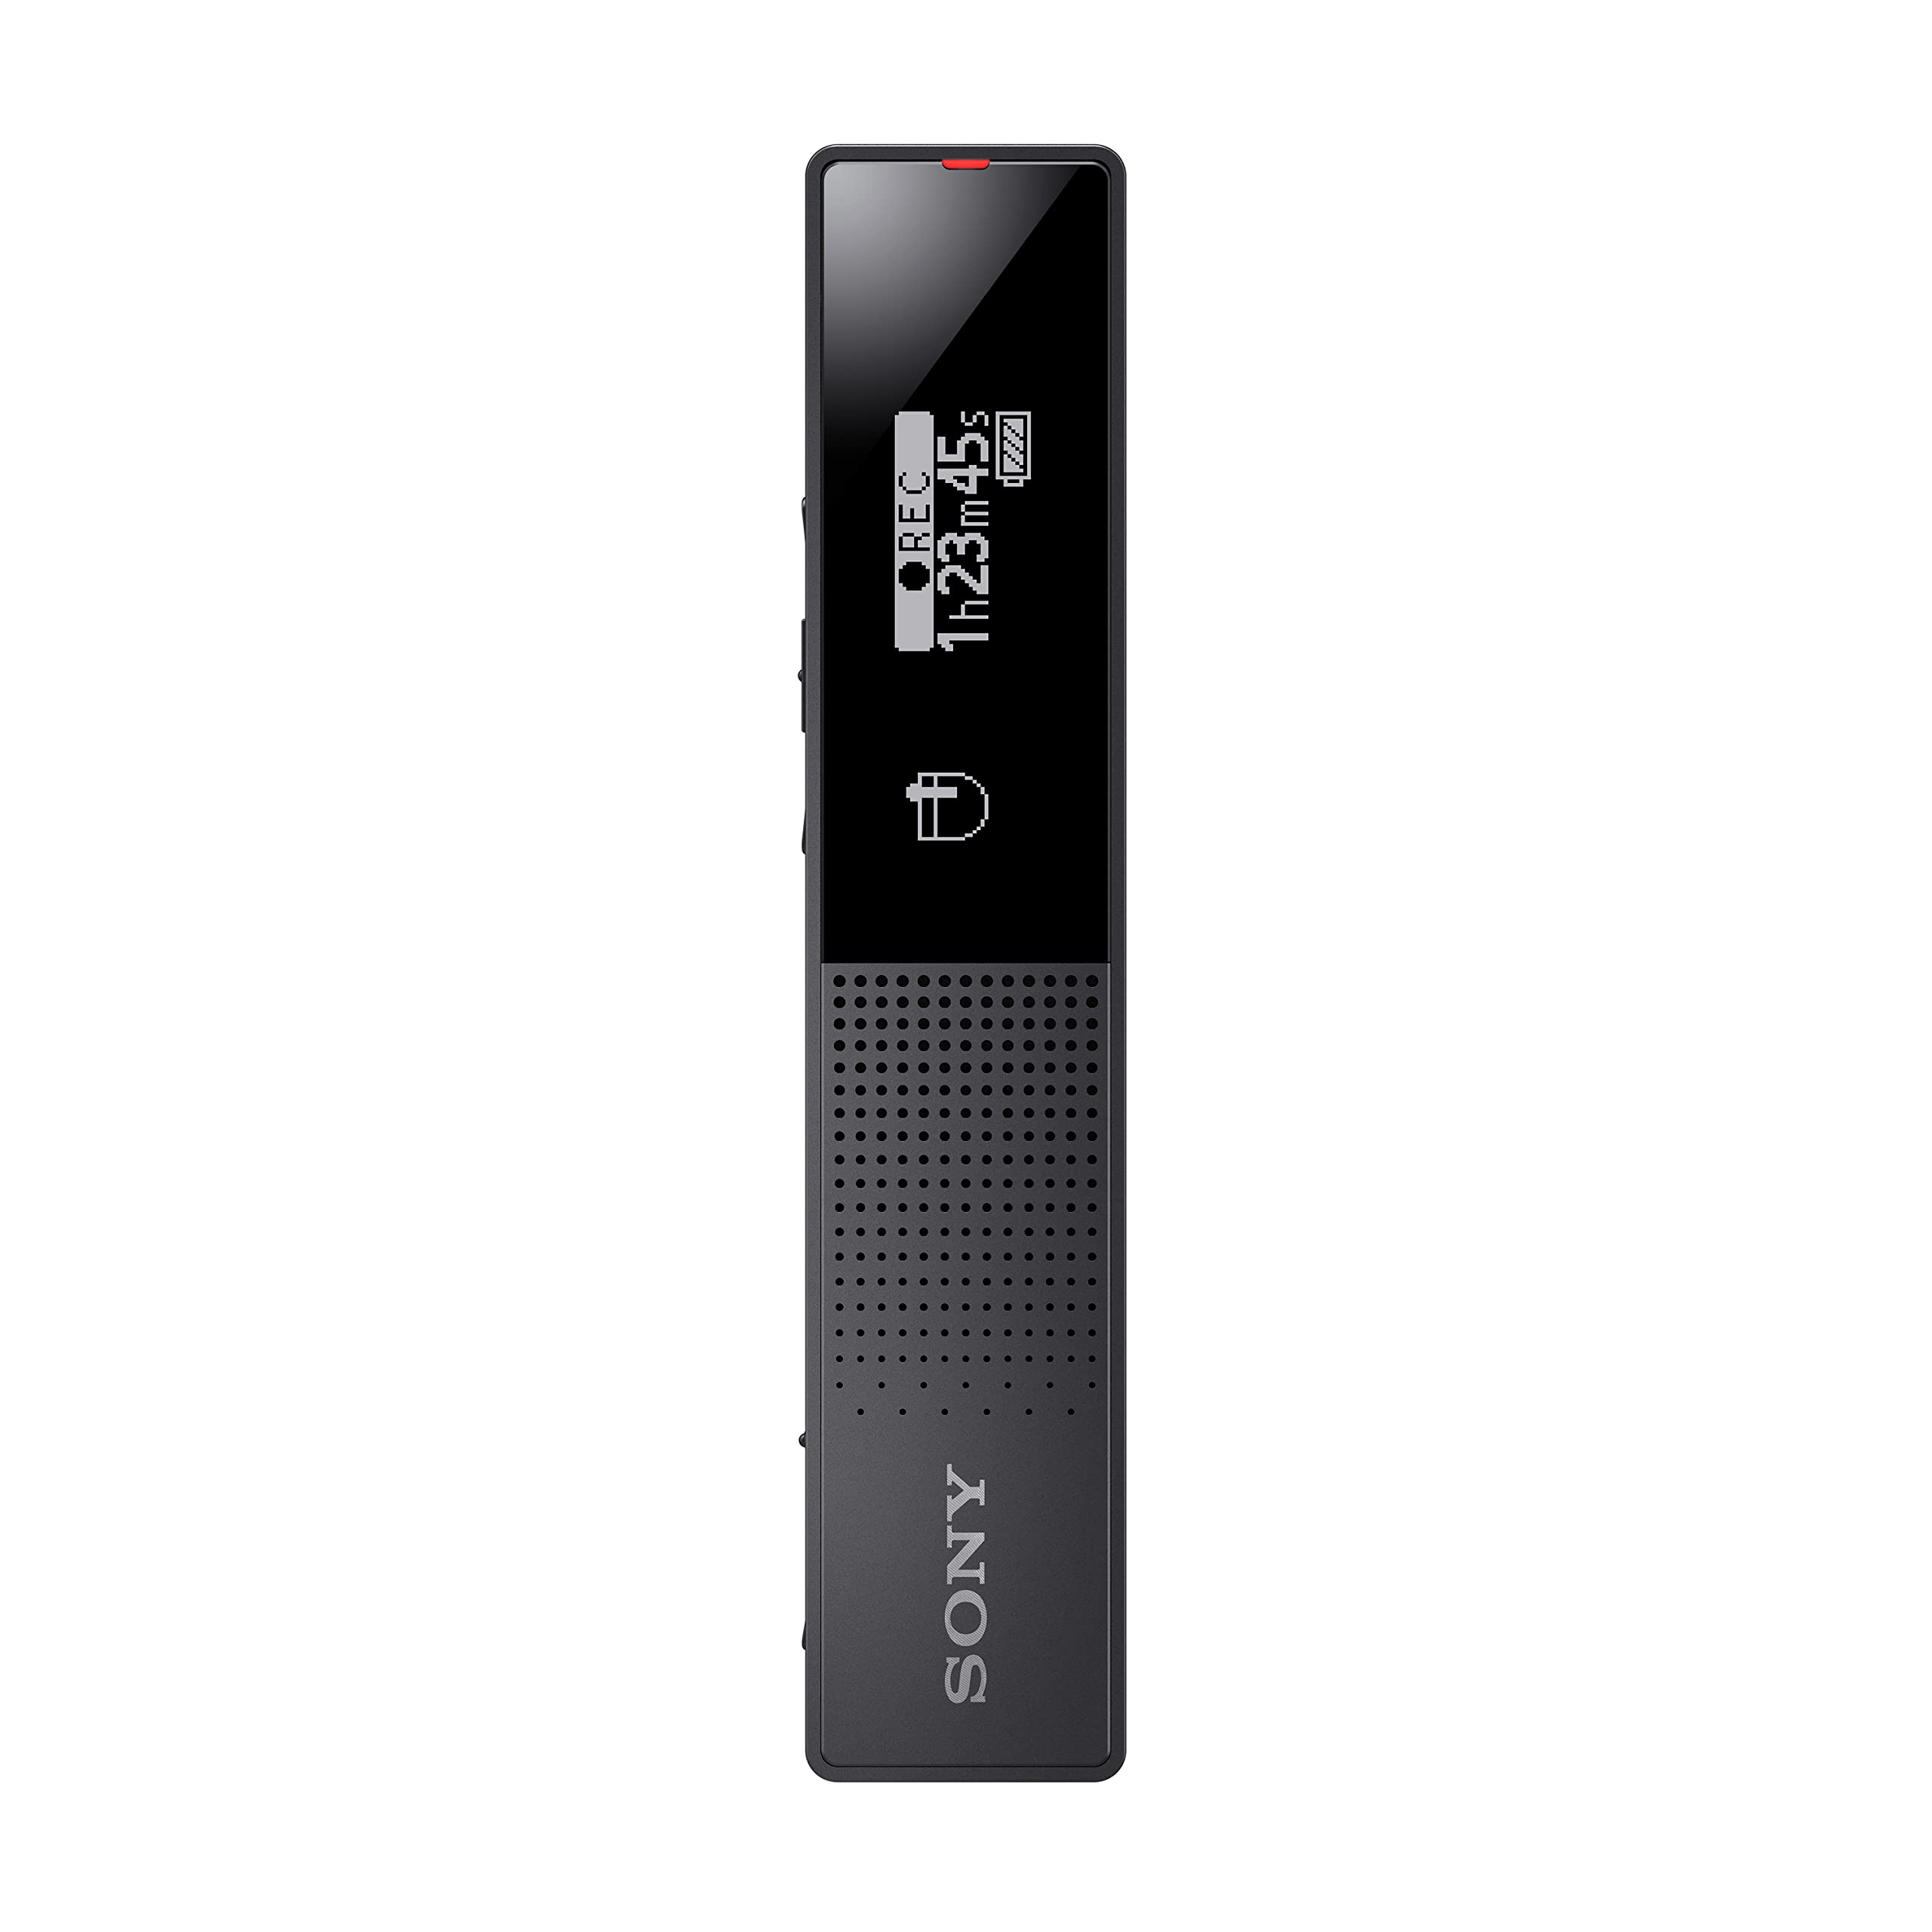 Sony ICD-TX660 — тонкий цифровой диктофон с OLED-диспле...